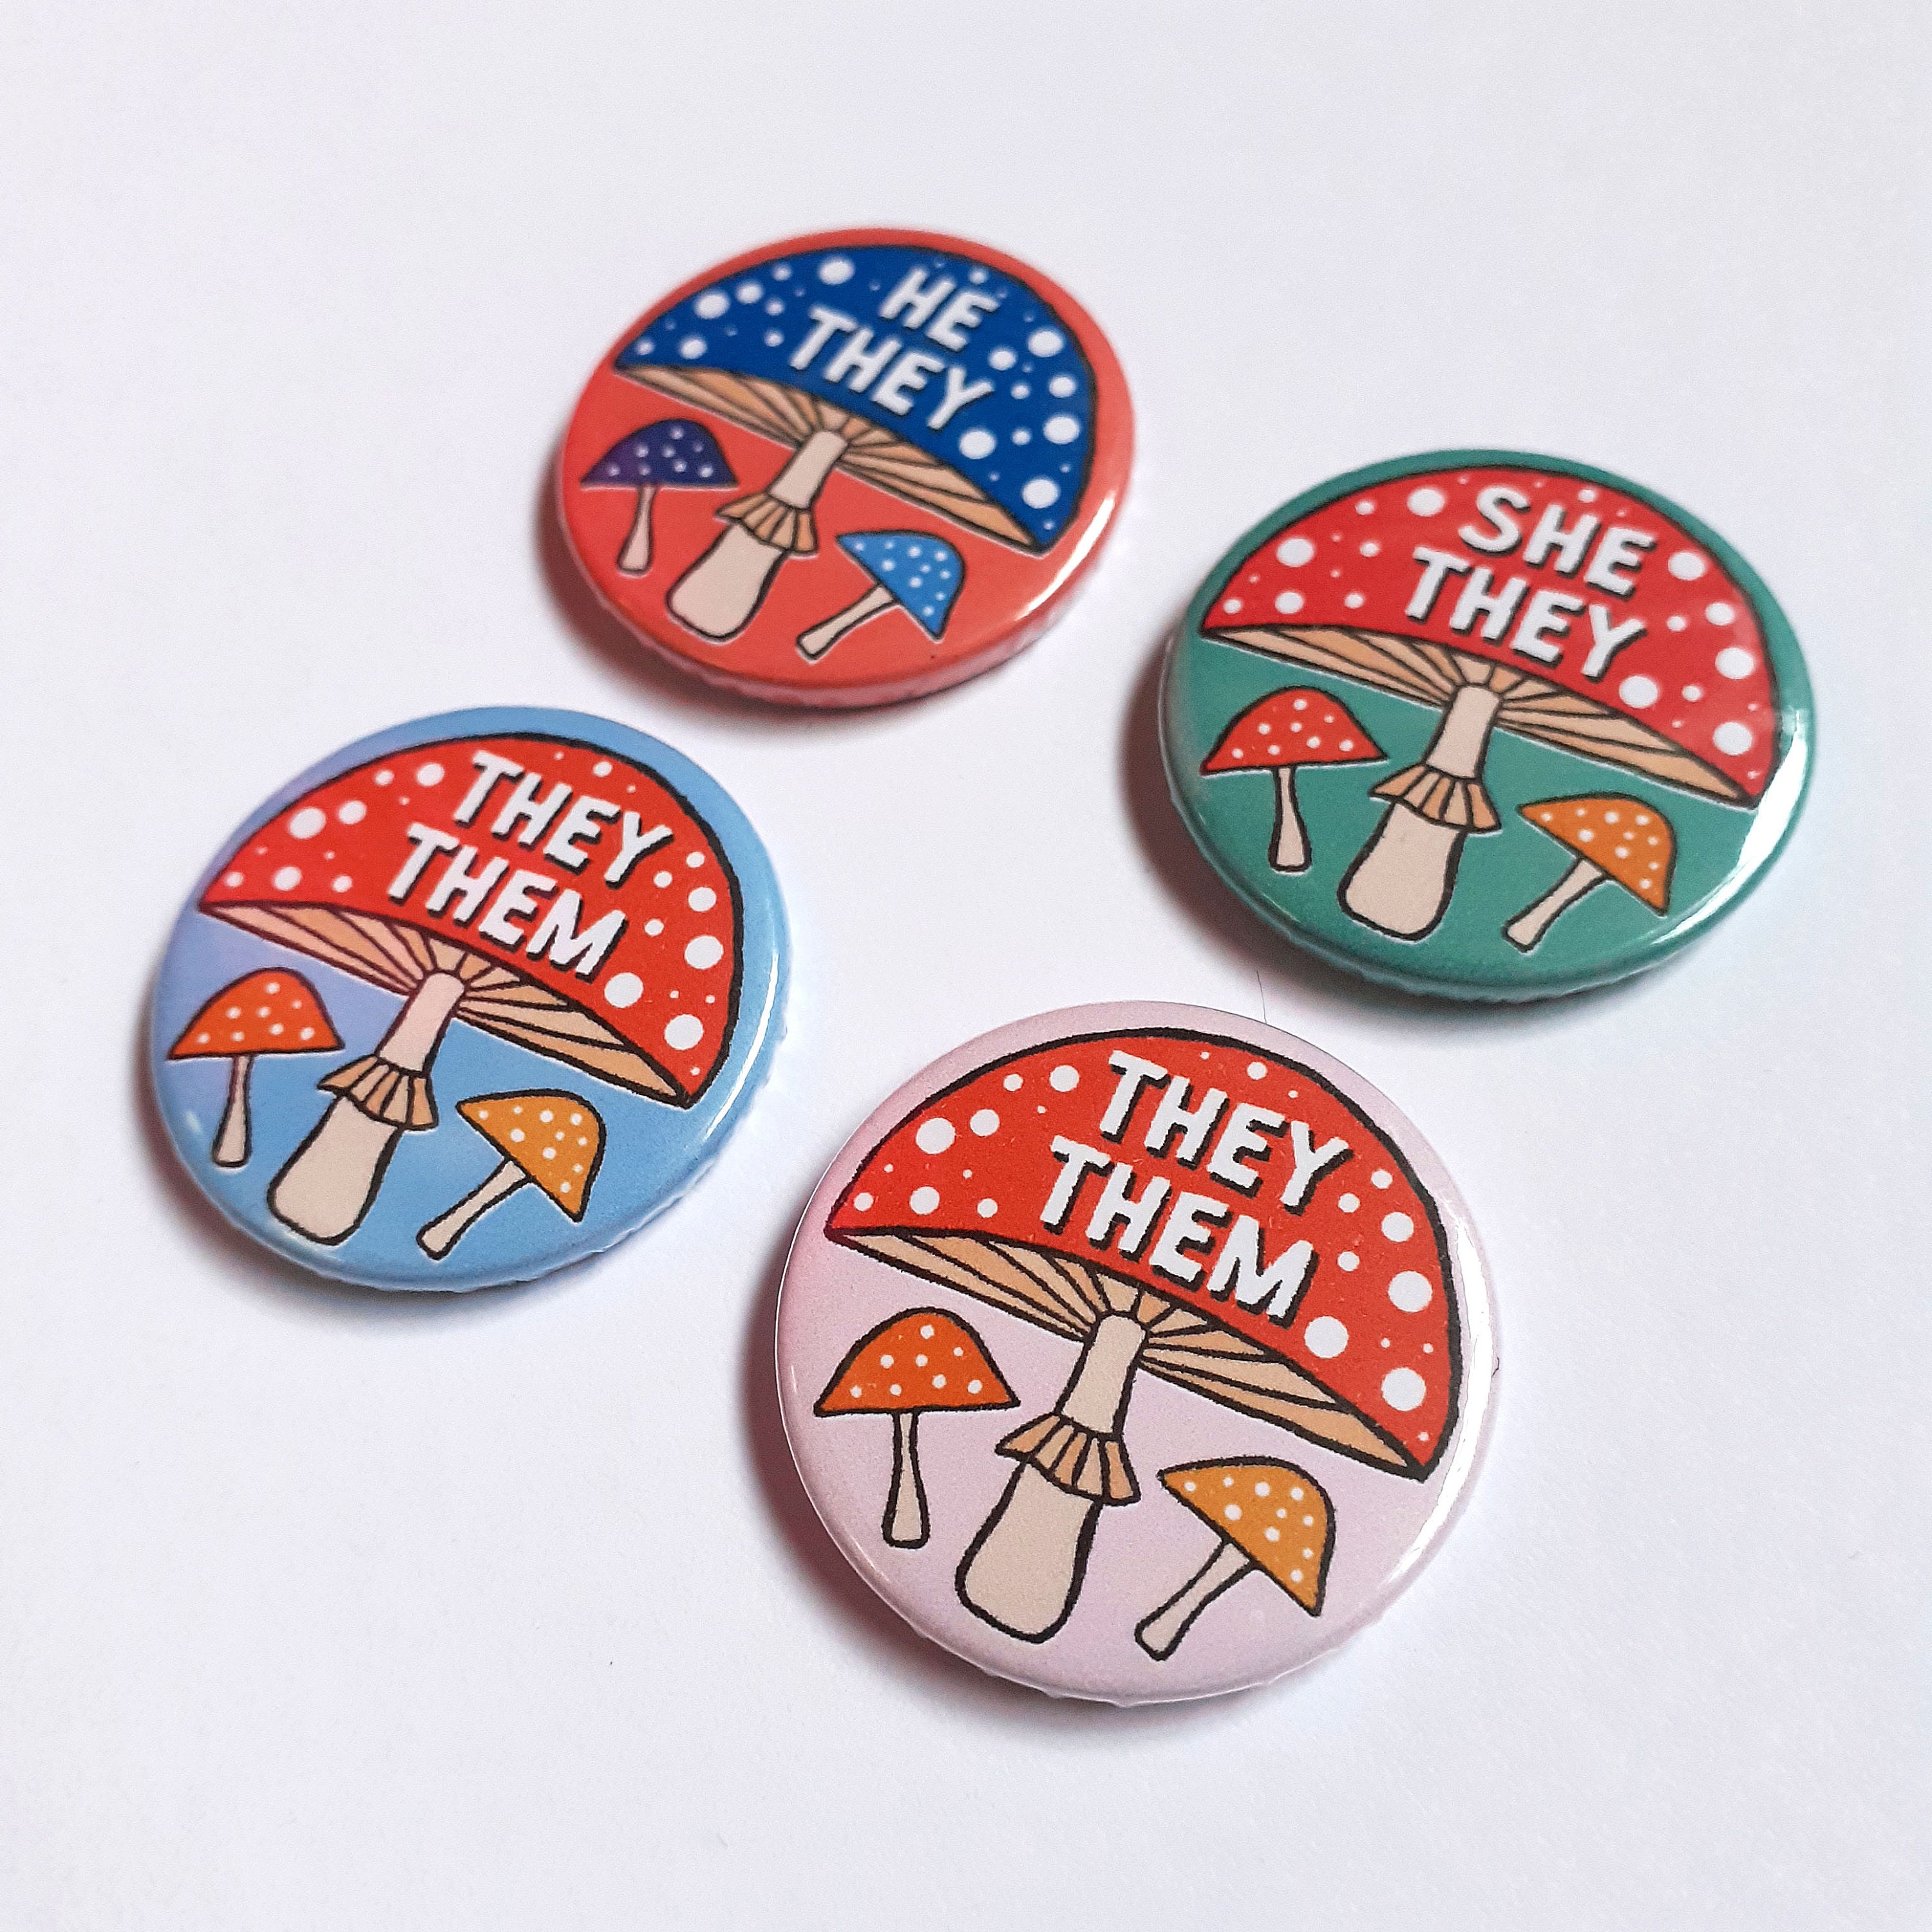 Regenbogenfarbe Pronomen Gender Pronomen Buttons Anstecker LGBT Pronoun SHE/THEY Pin Button Badge LGBTQ+ SHE THEY Buttons Anstecker 